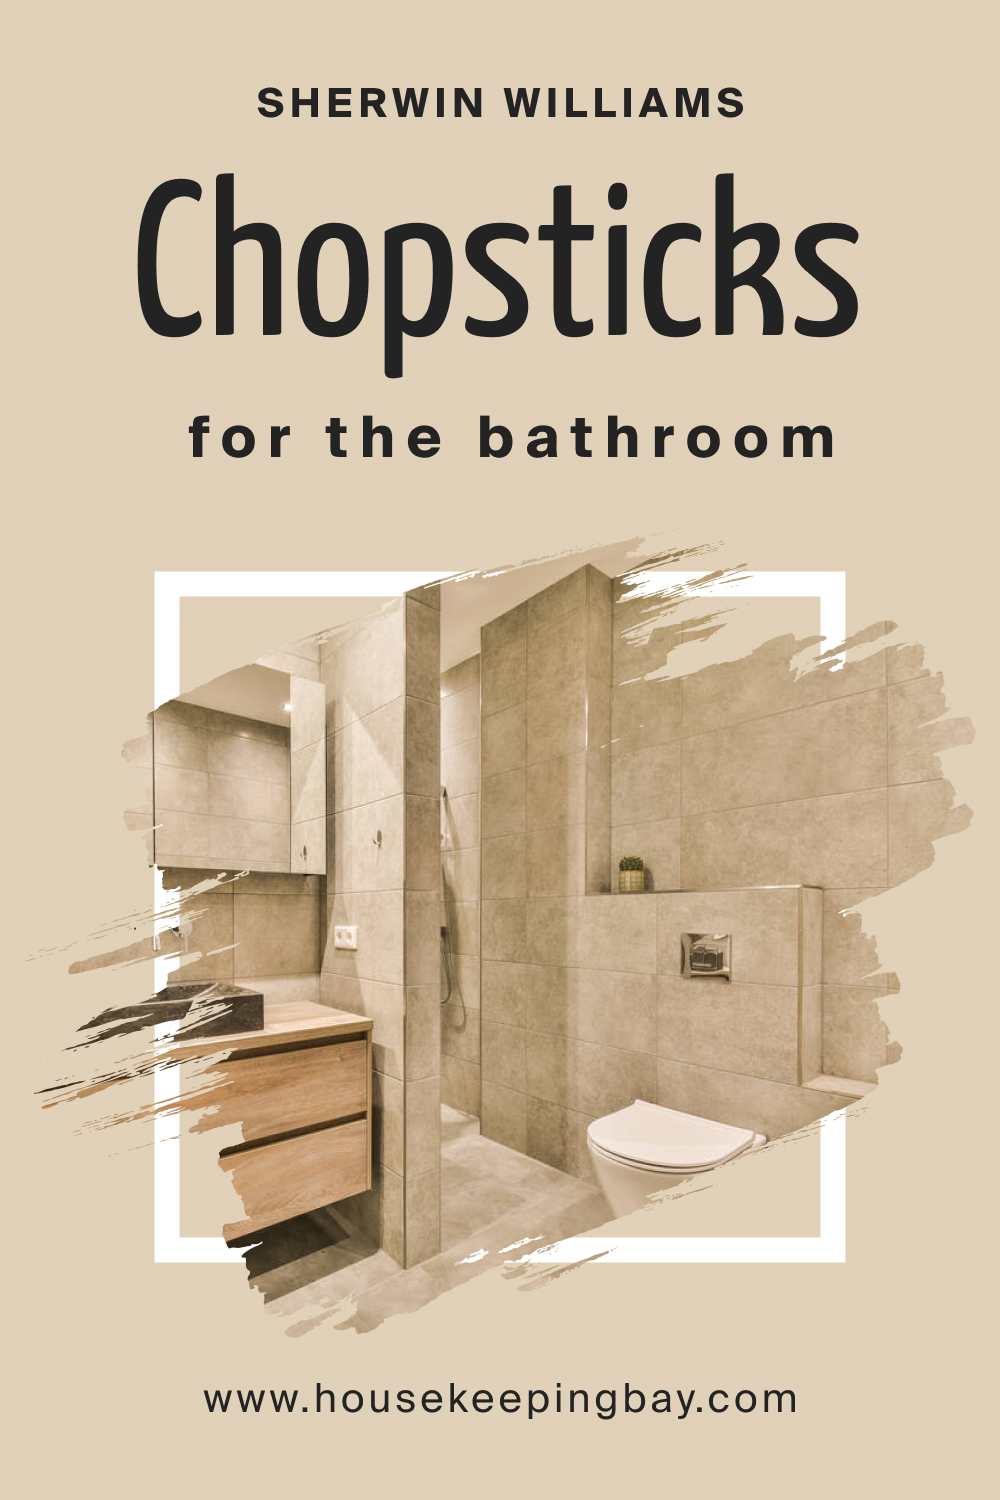 Sherwin Williams. SW Chopsticks in the Bathroom